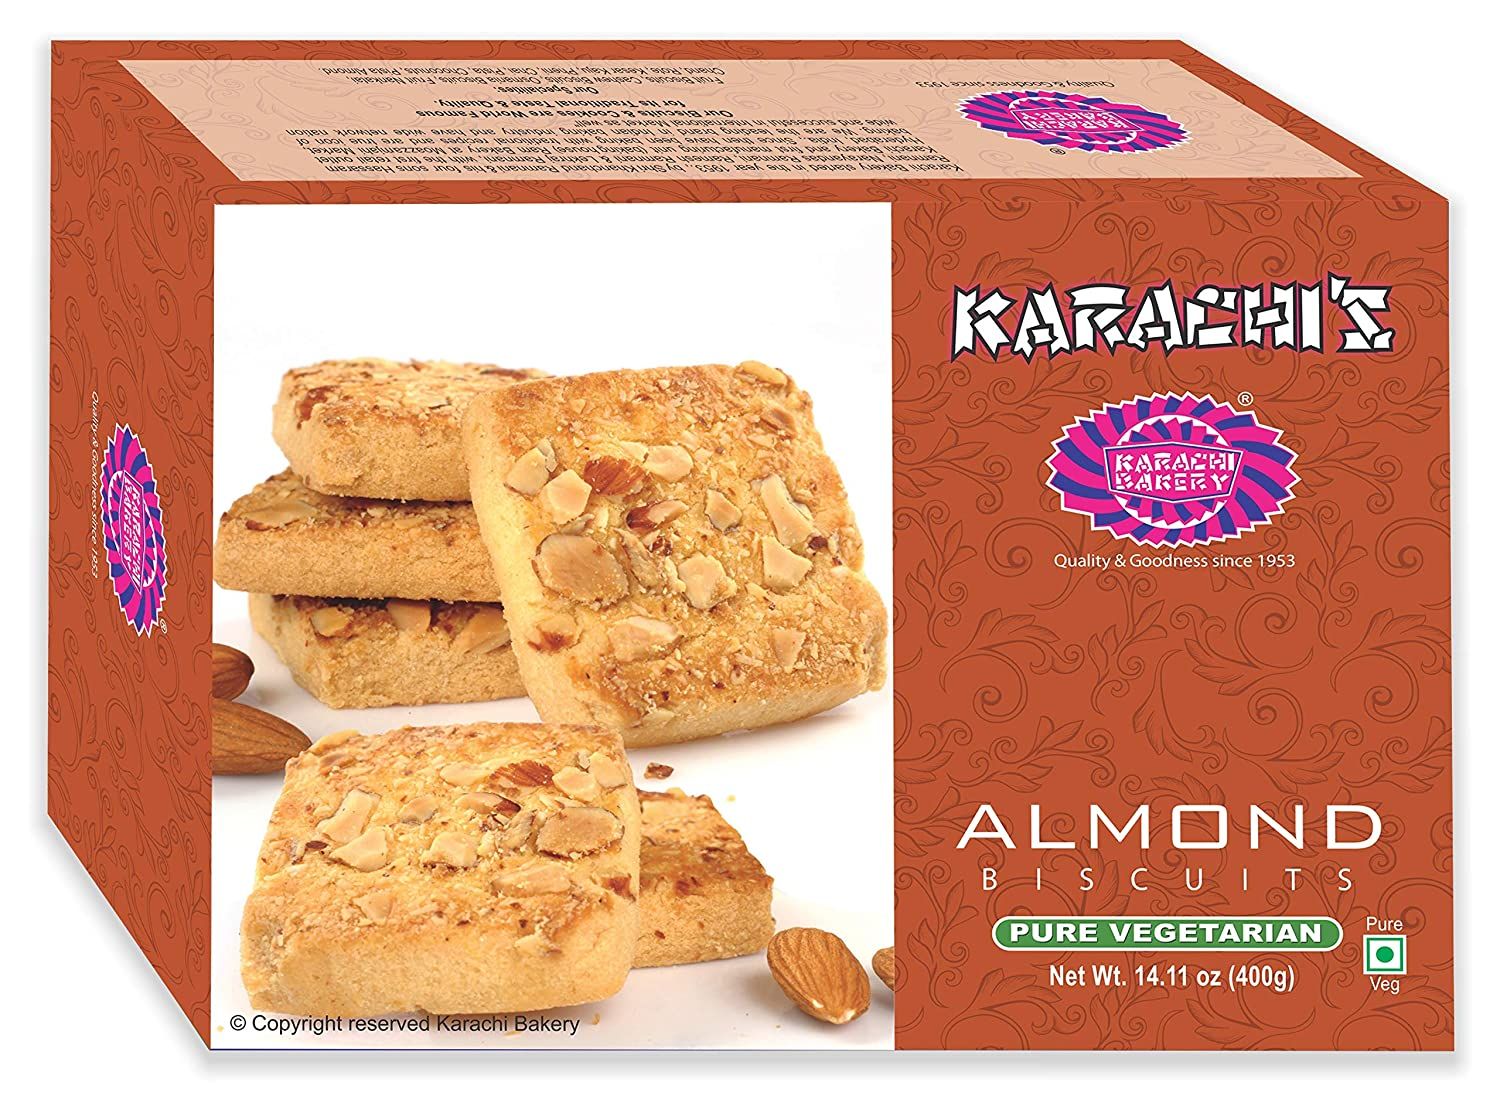 Karachi Almond Biscuits Image